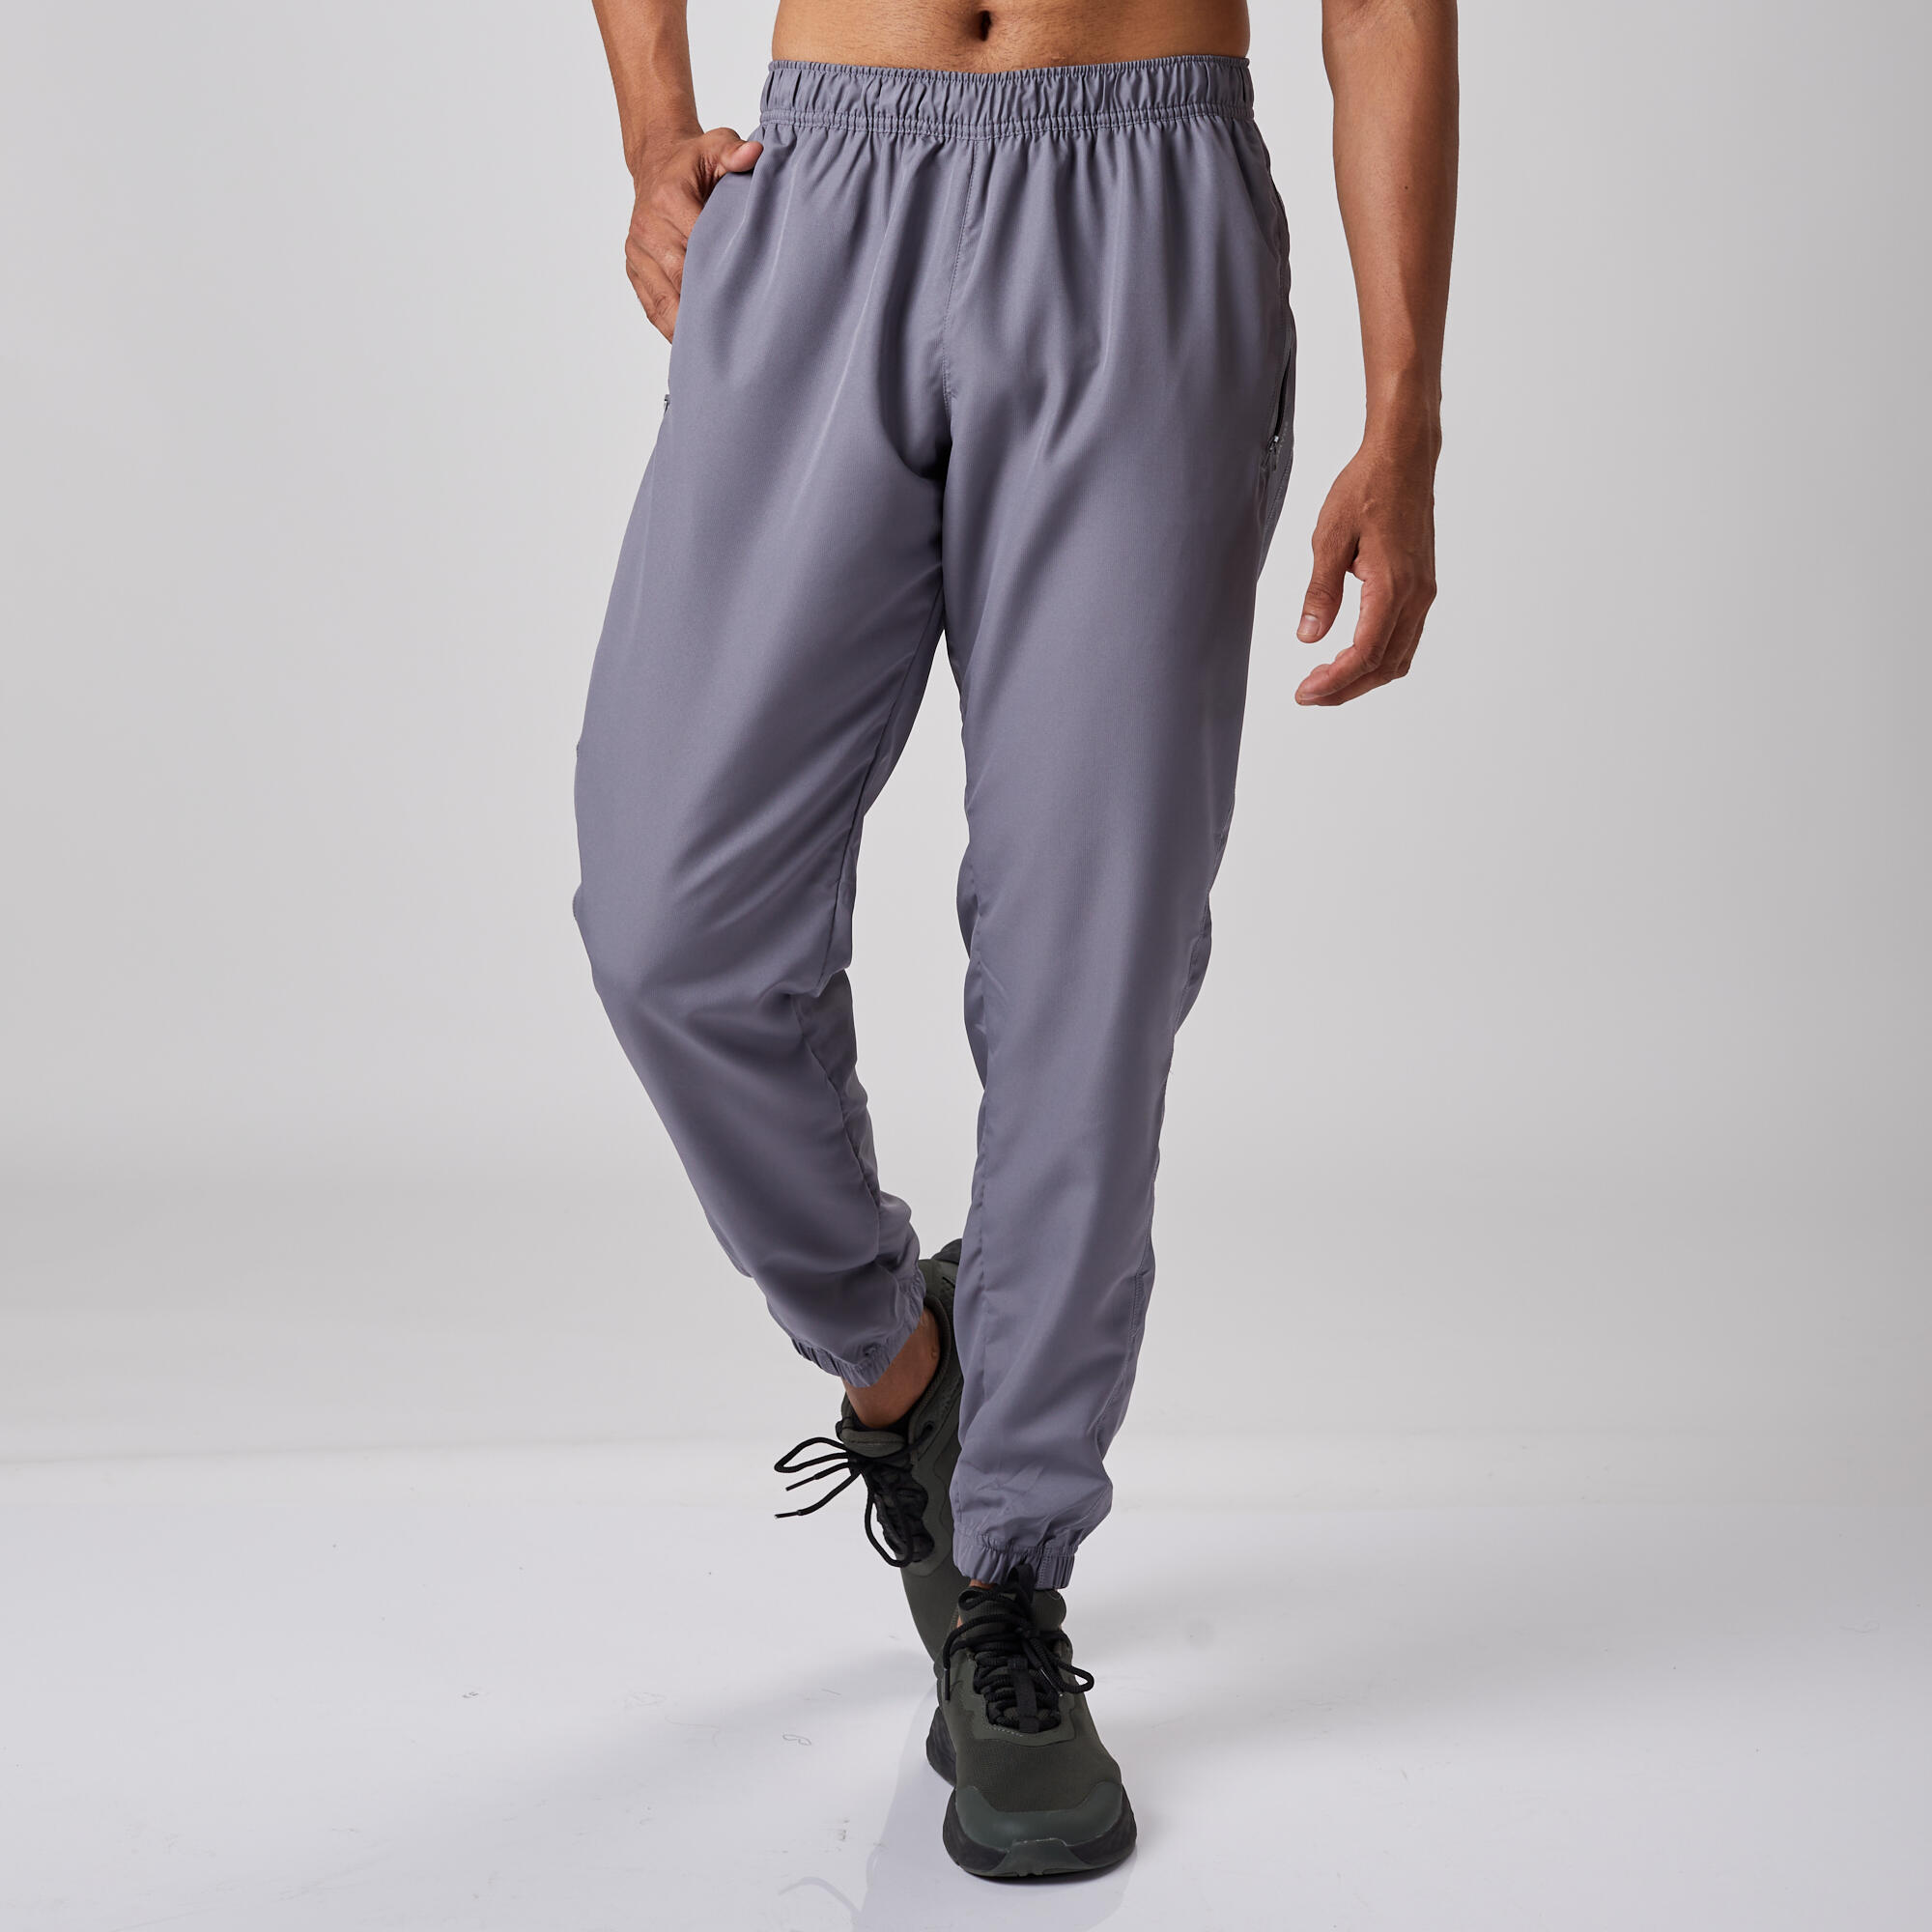 Van Heusen Innerwear Track Pants, Men Grey Solid Regular Fit Casual Track  Pants for Athleisure at Vanheusenindia.abfrl.in